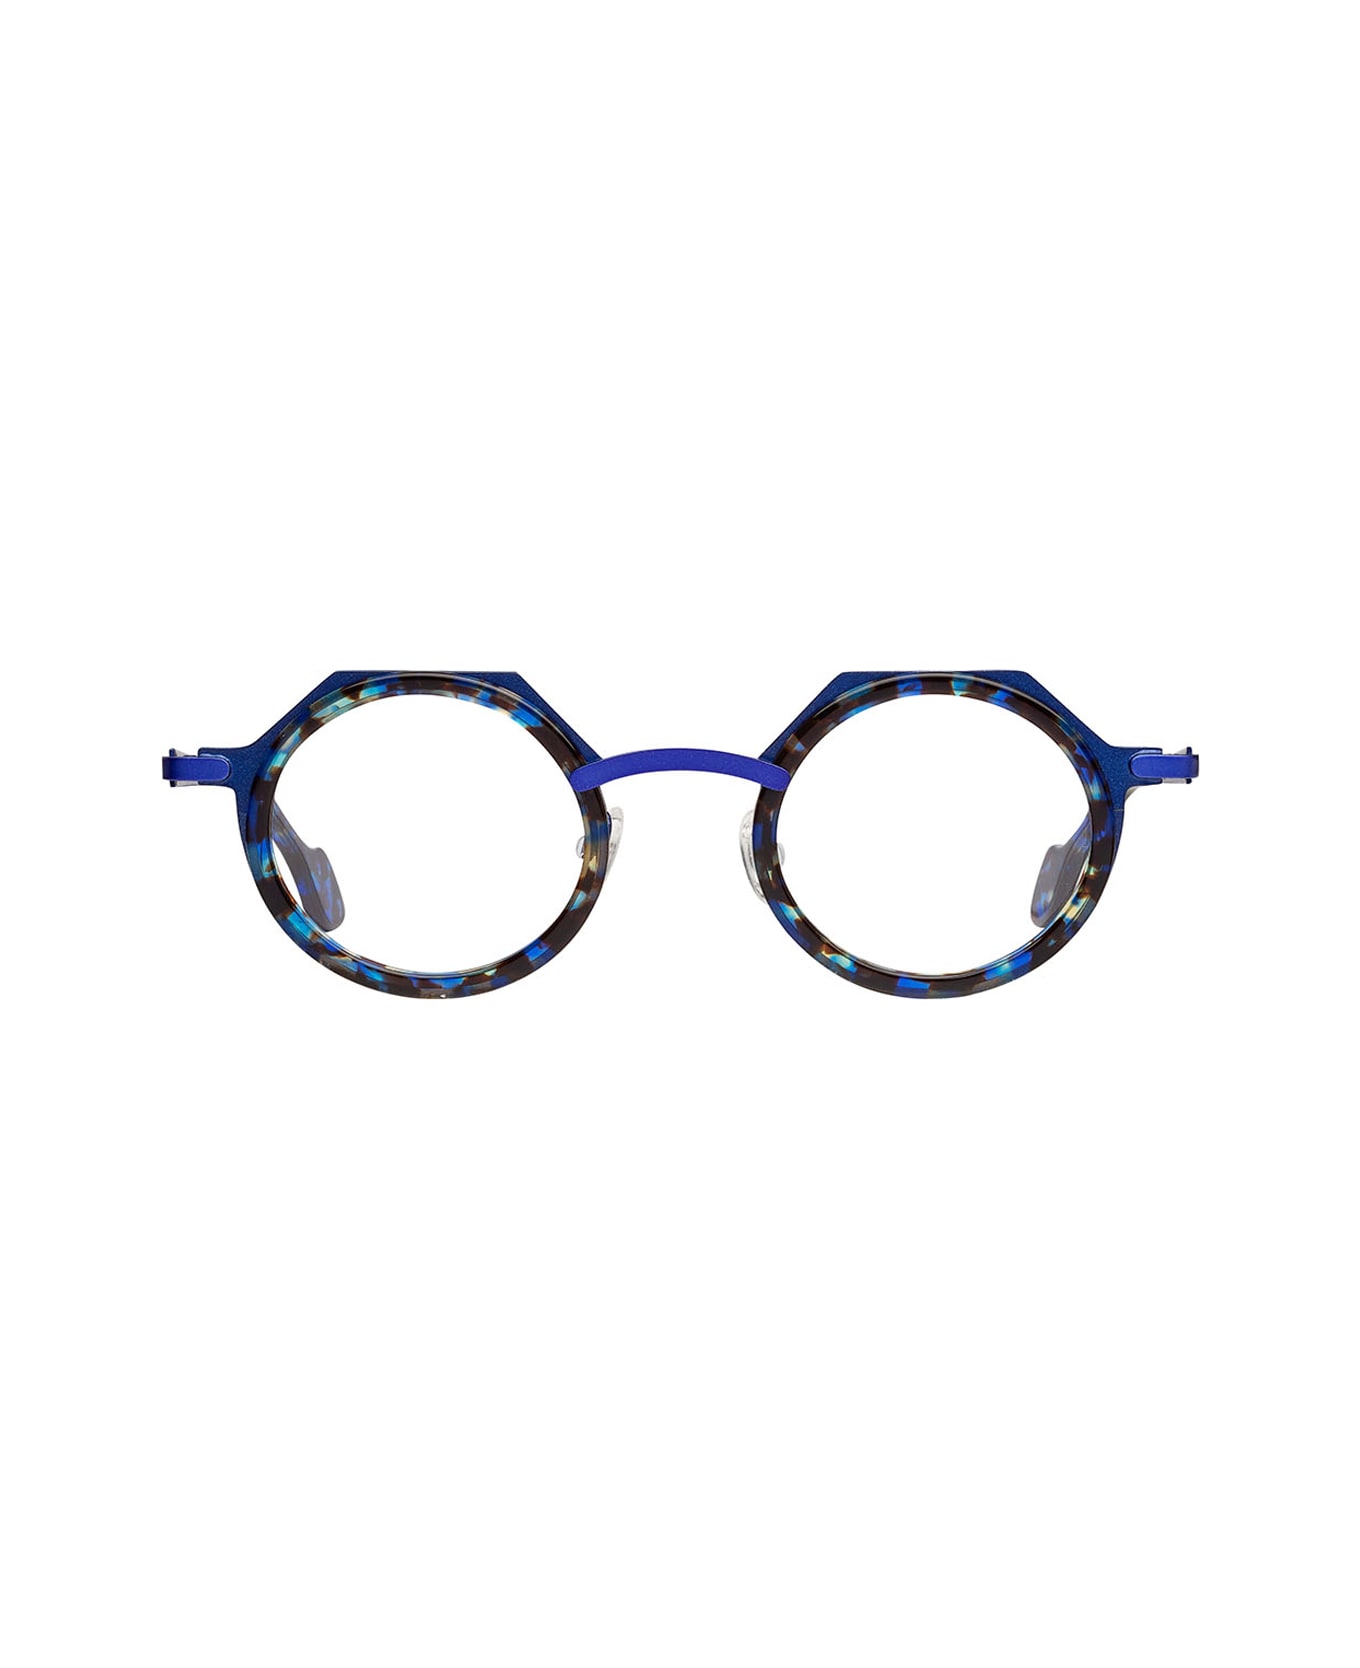 Matttew Ippon Glasses - Blu アイウェア